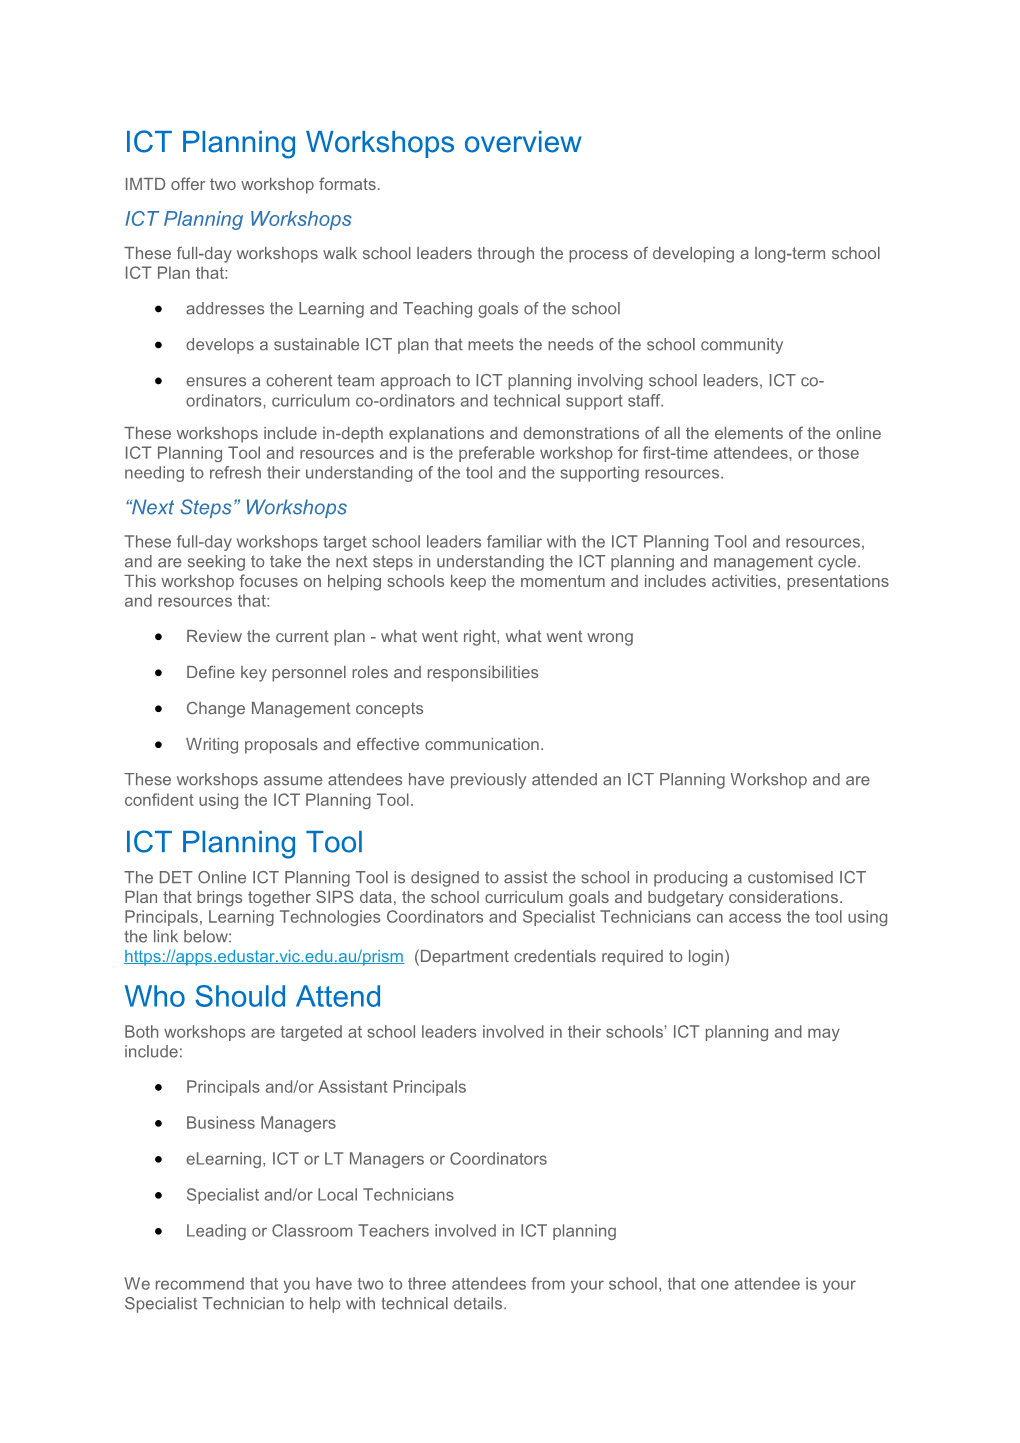 ICT Planning Workshops Overview